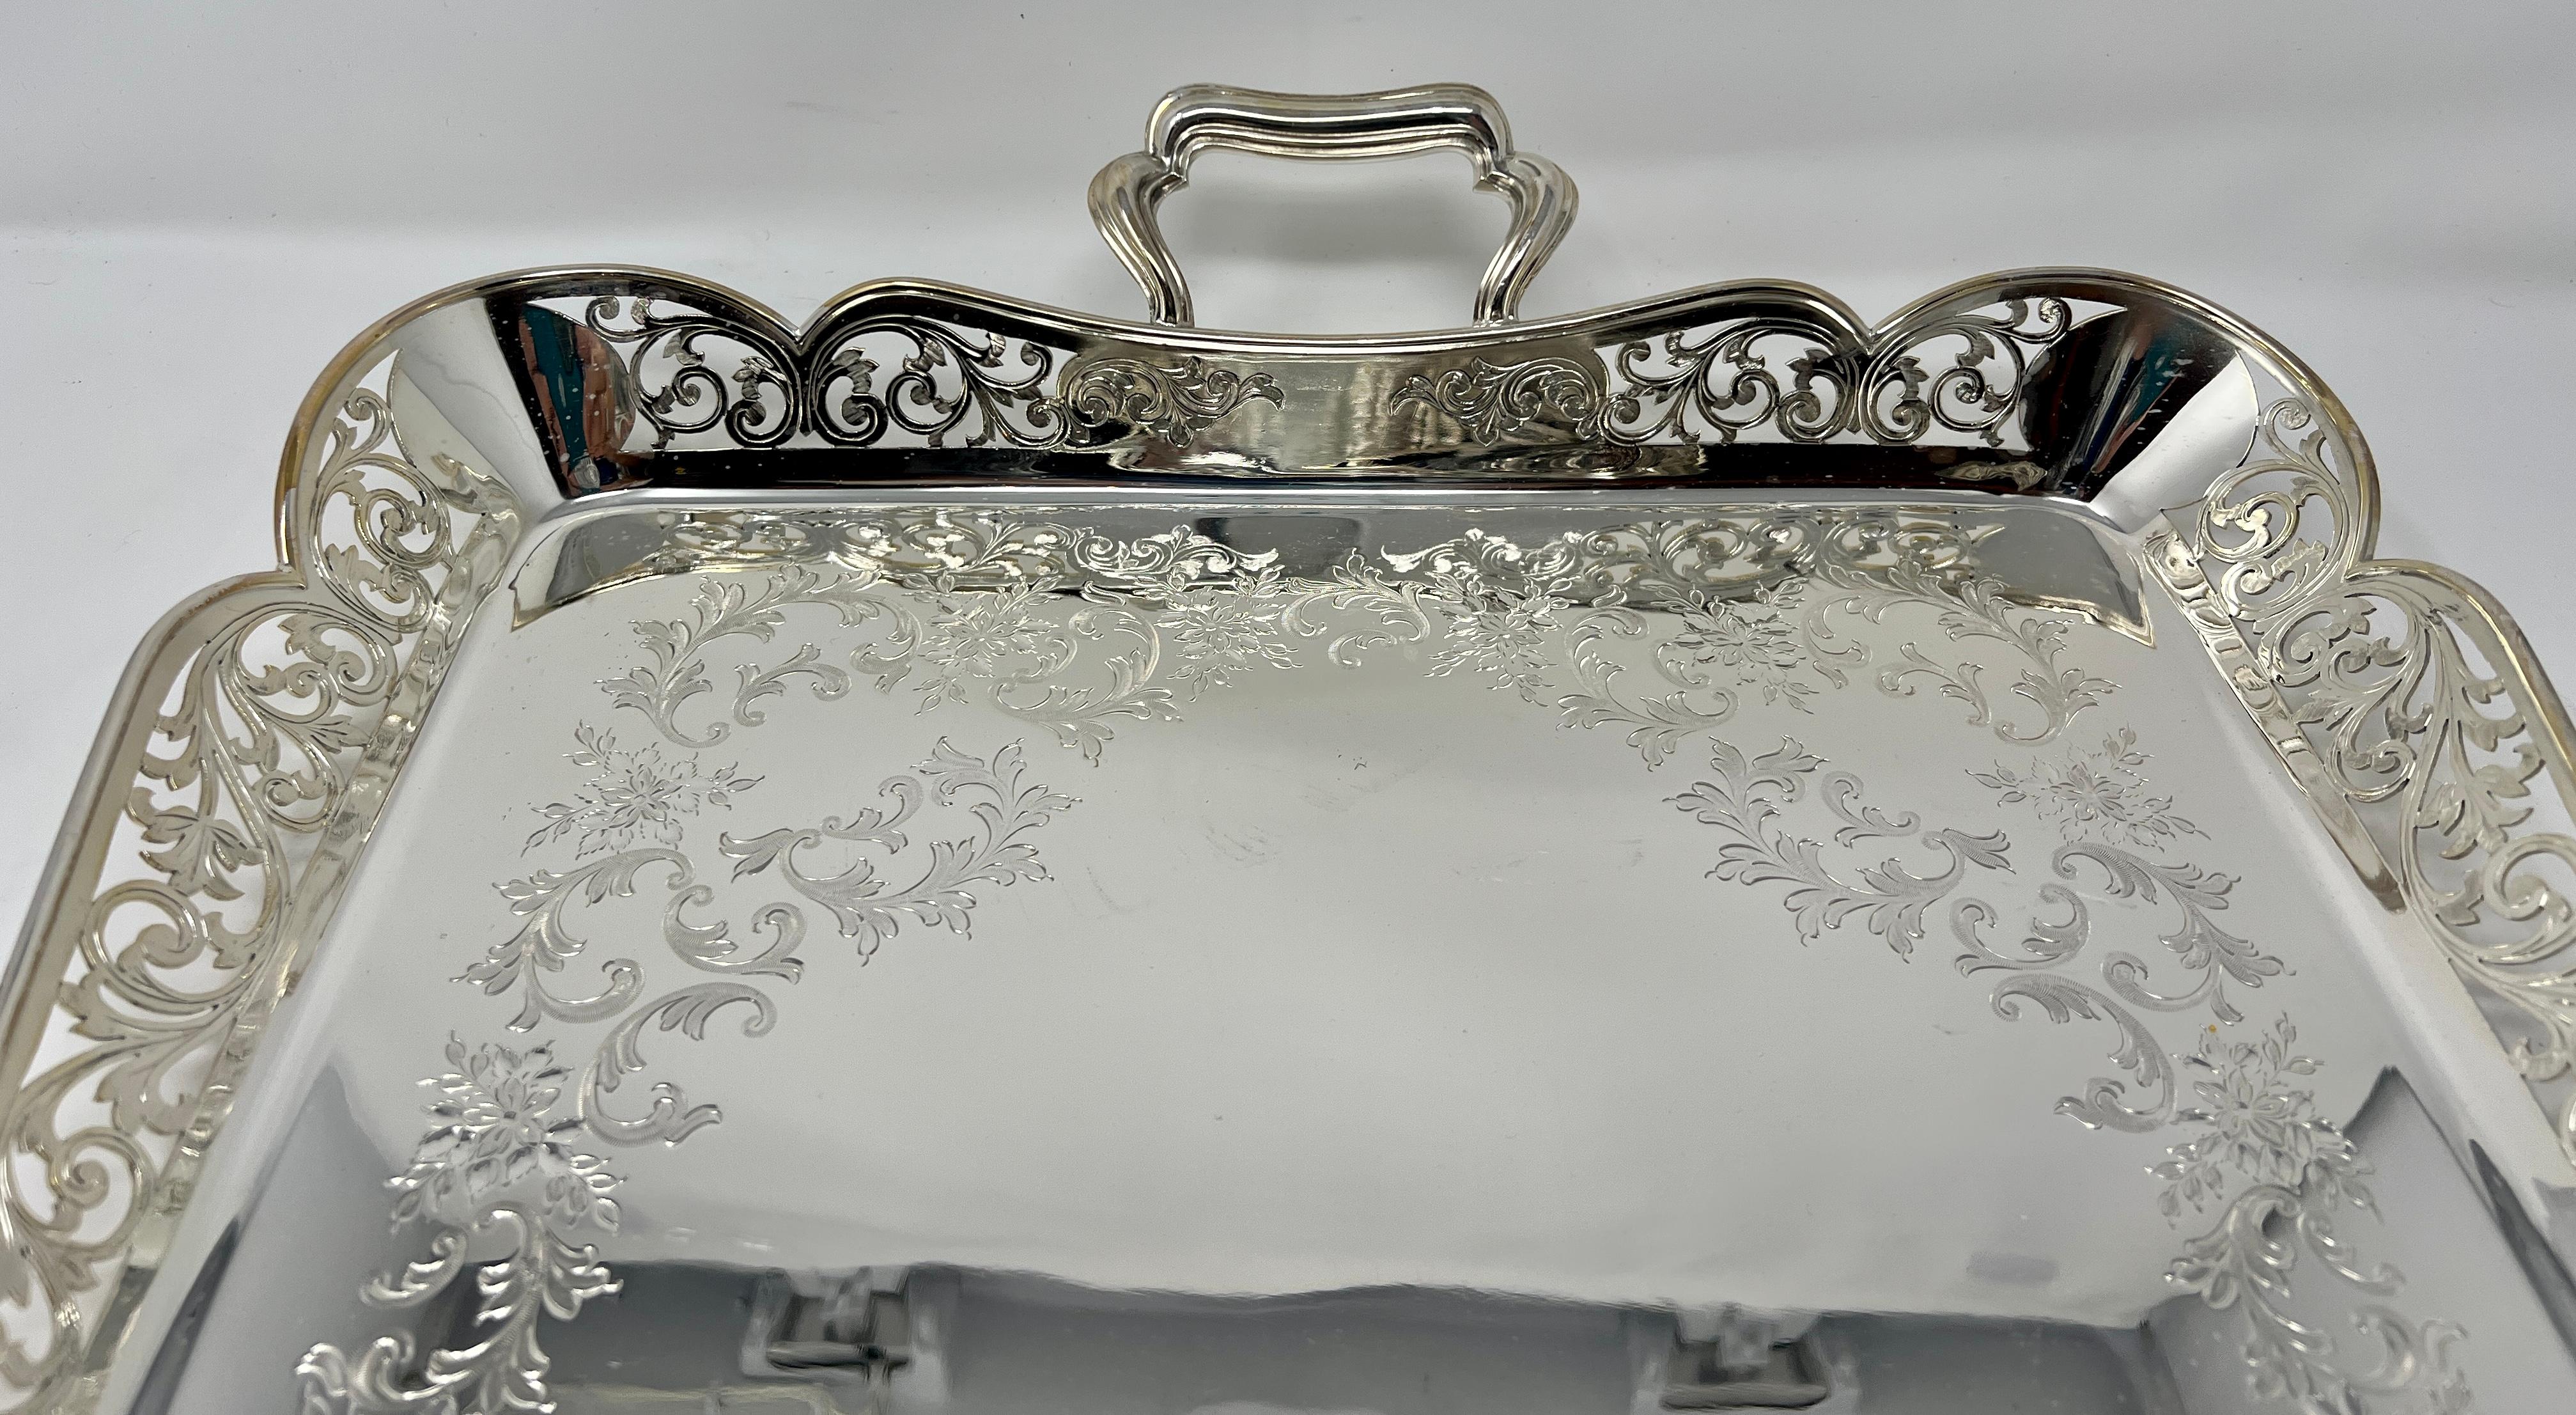 Antique English Silver Plate Galleried Tray, Circa 1890.
